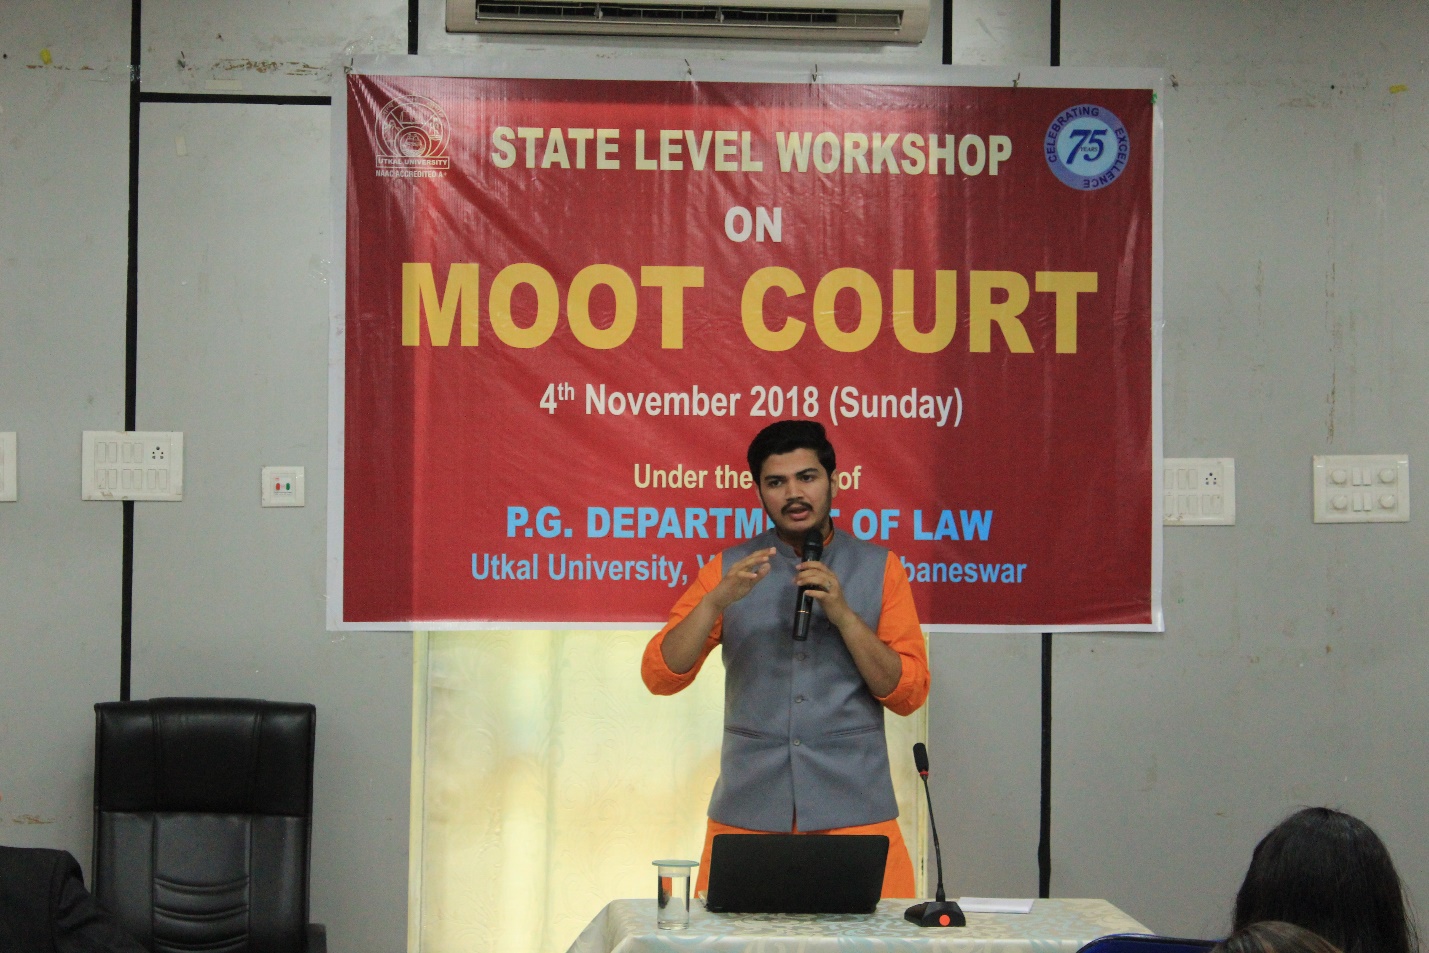 State Level Workshop on Moot Court 4th November 2018